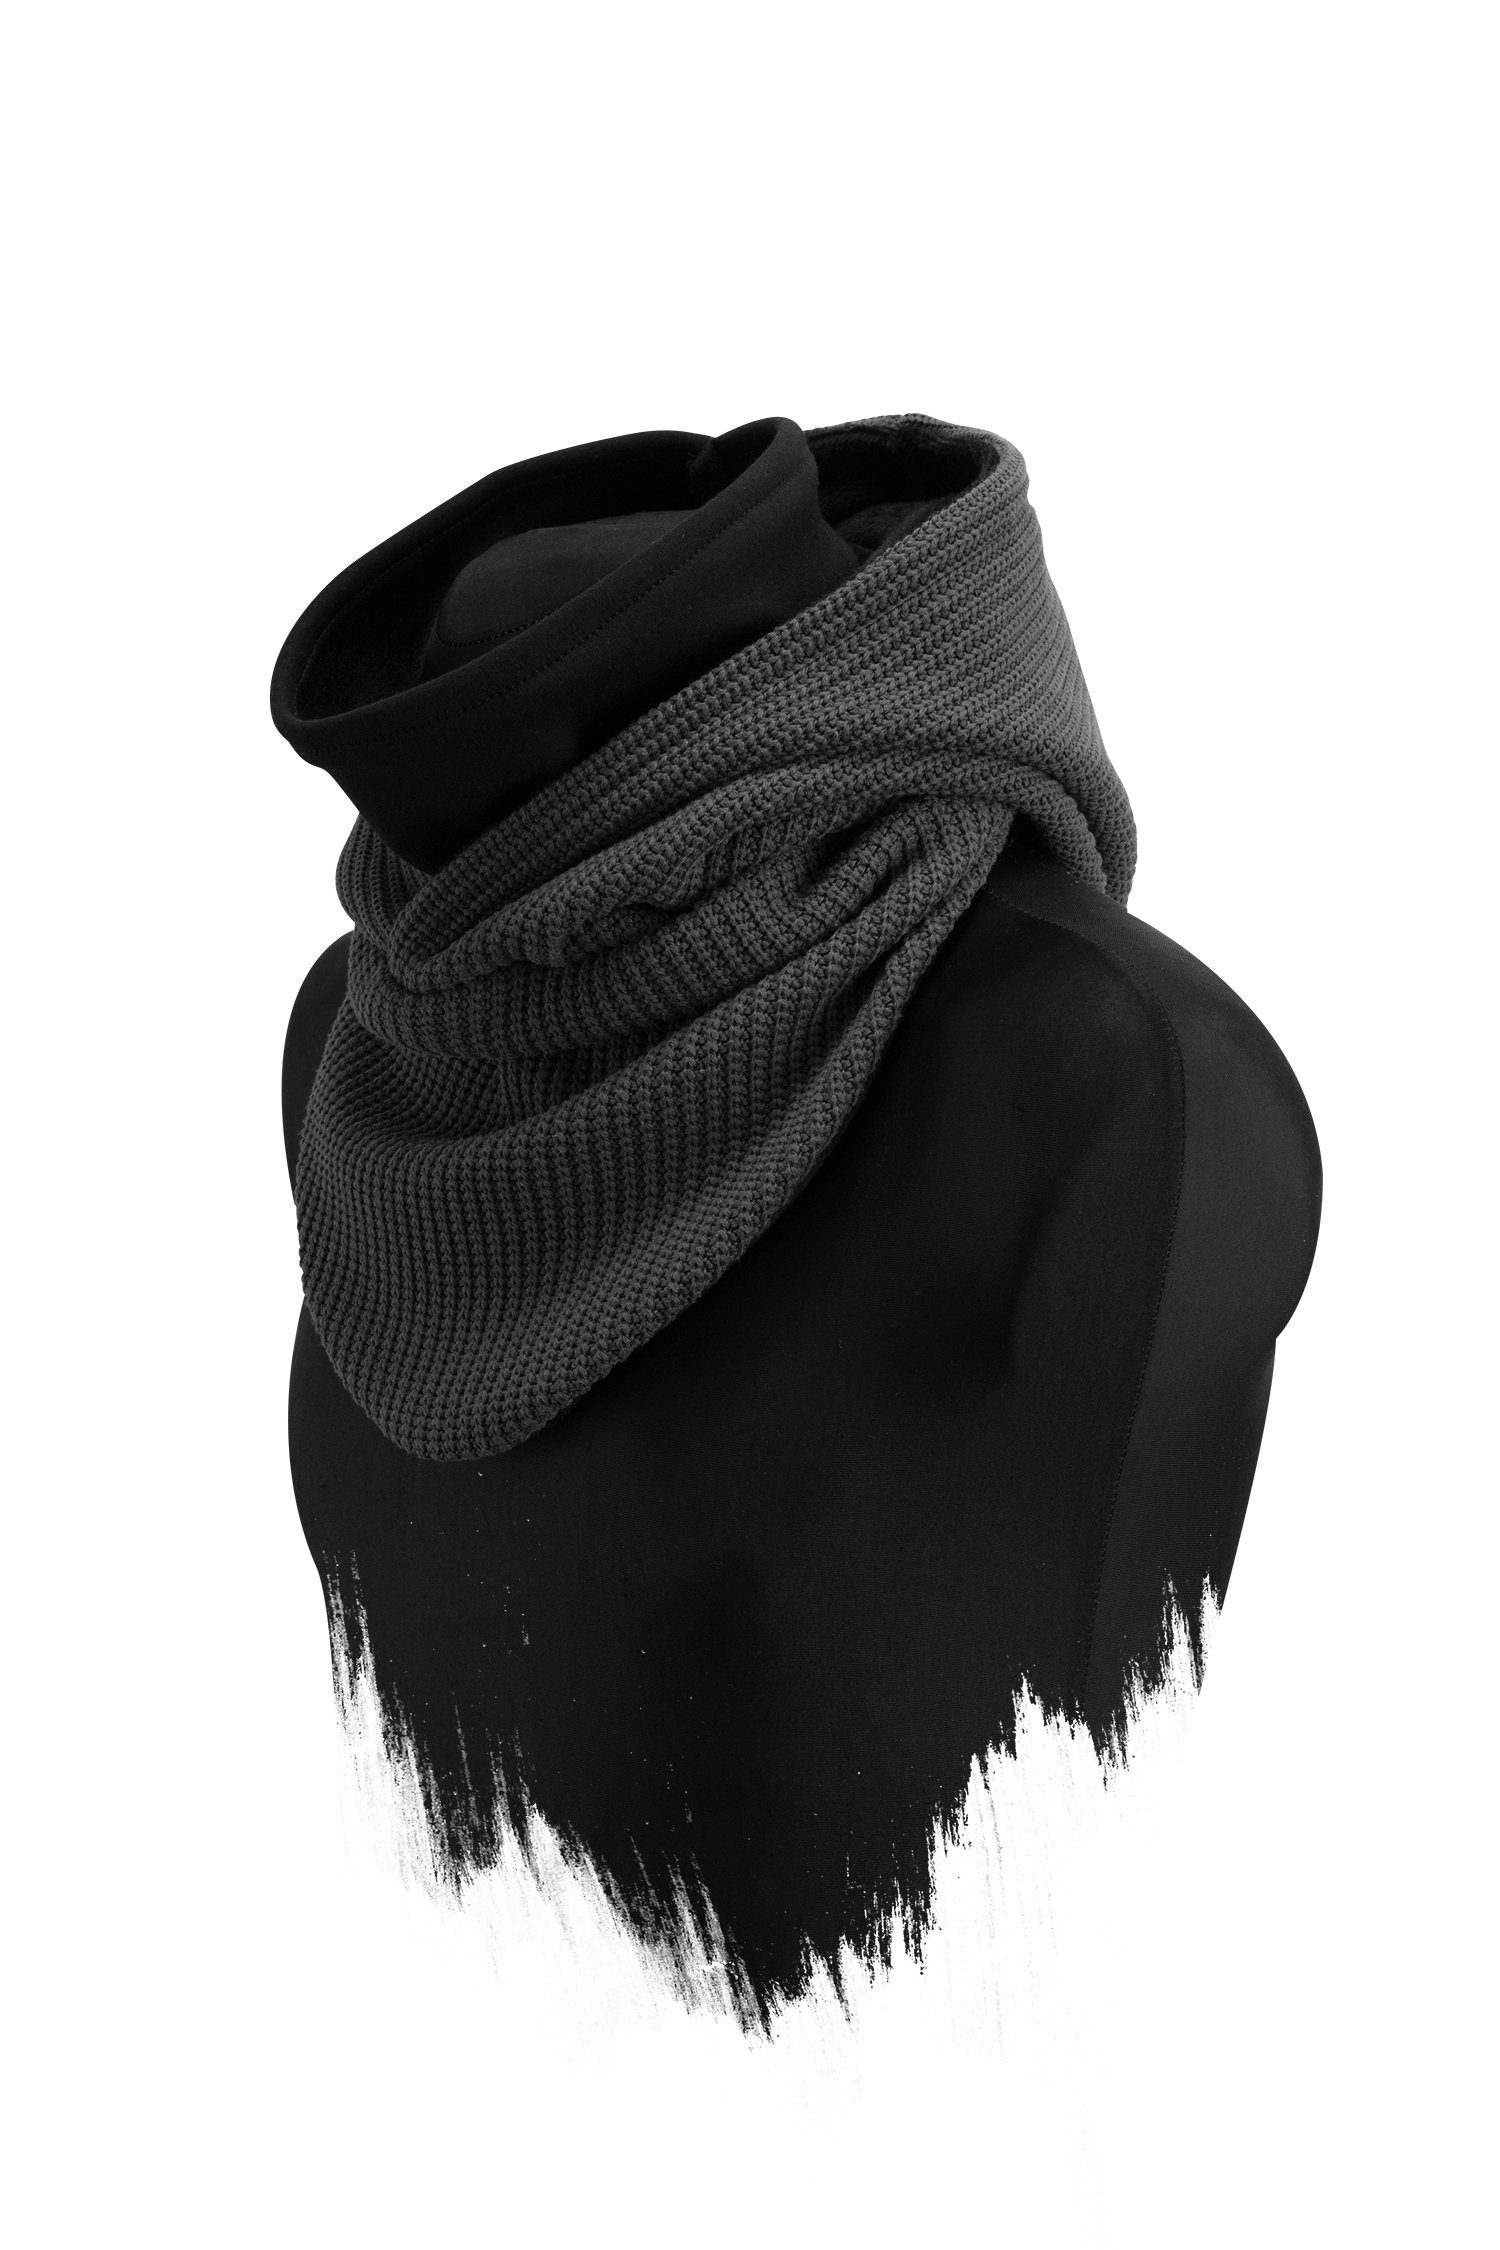 Knit Hooded Schal, mit Kapuzenschal, Storm Grey Loop Modeschal Strickschal, integriertem Manufaktur13 - Windbreaker